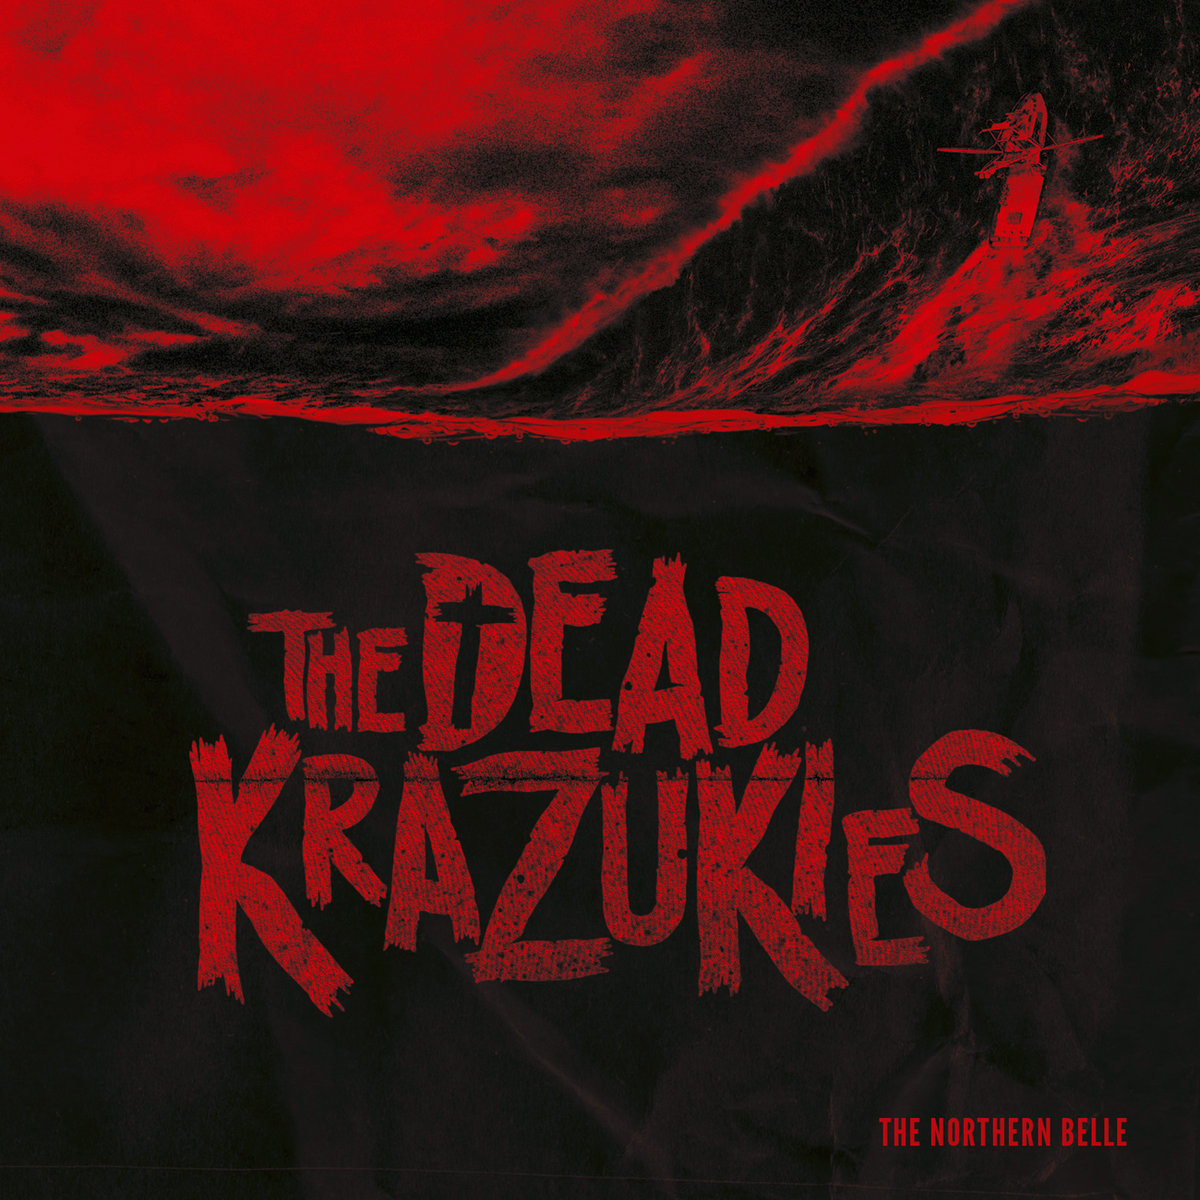 The Dead Krazukies - The Northern Belle